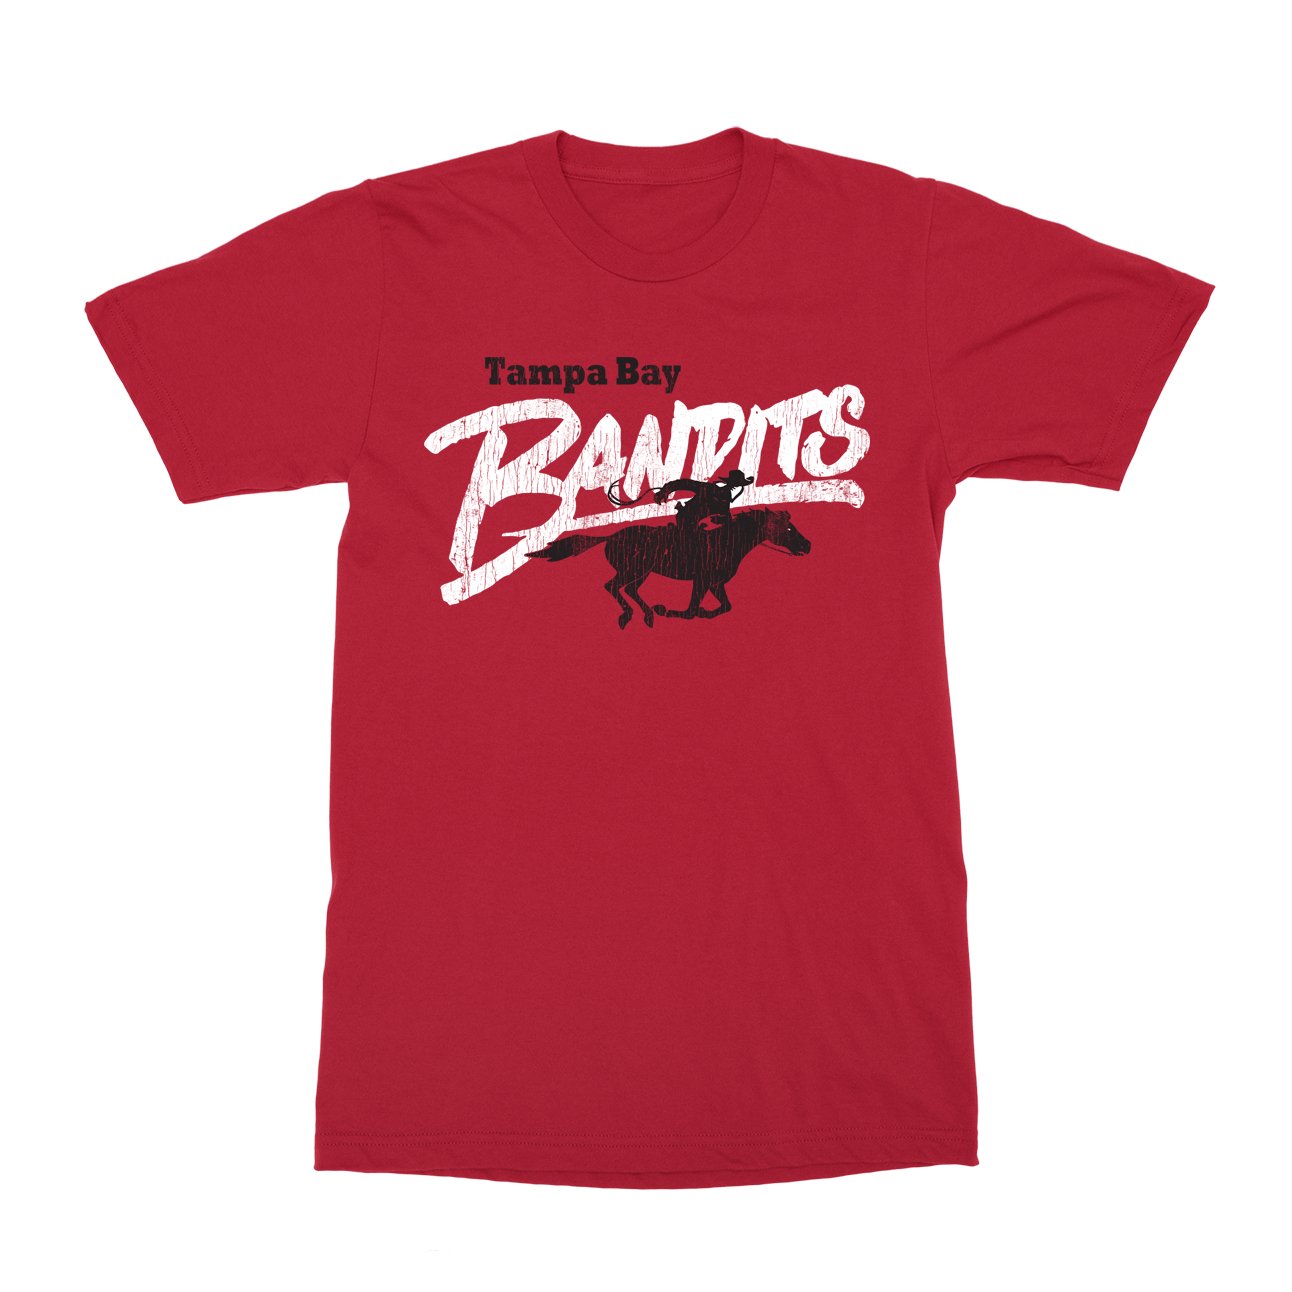 Tamba Bay Bandits T-Shirt - Black Cat MFG -